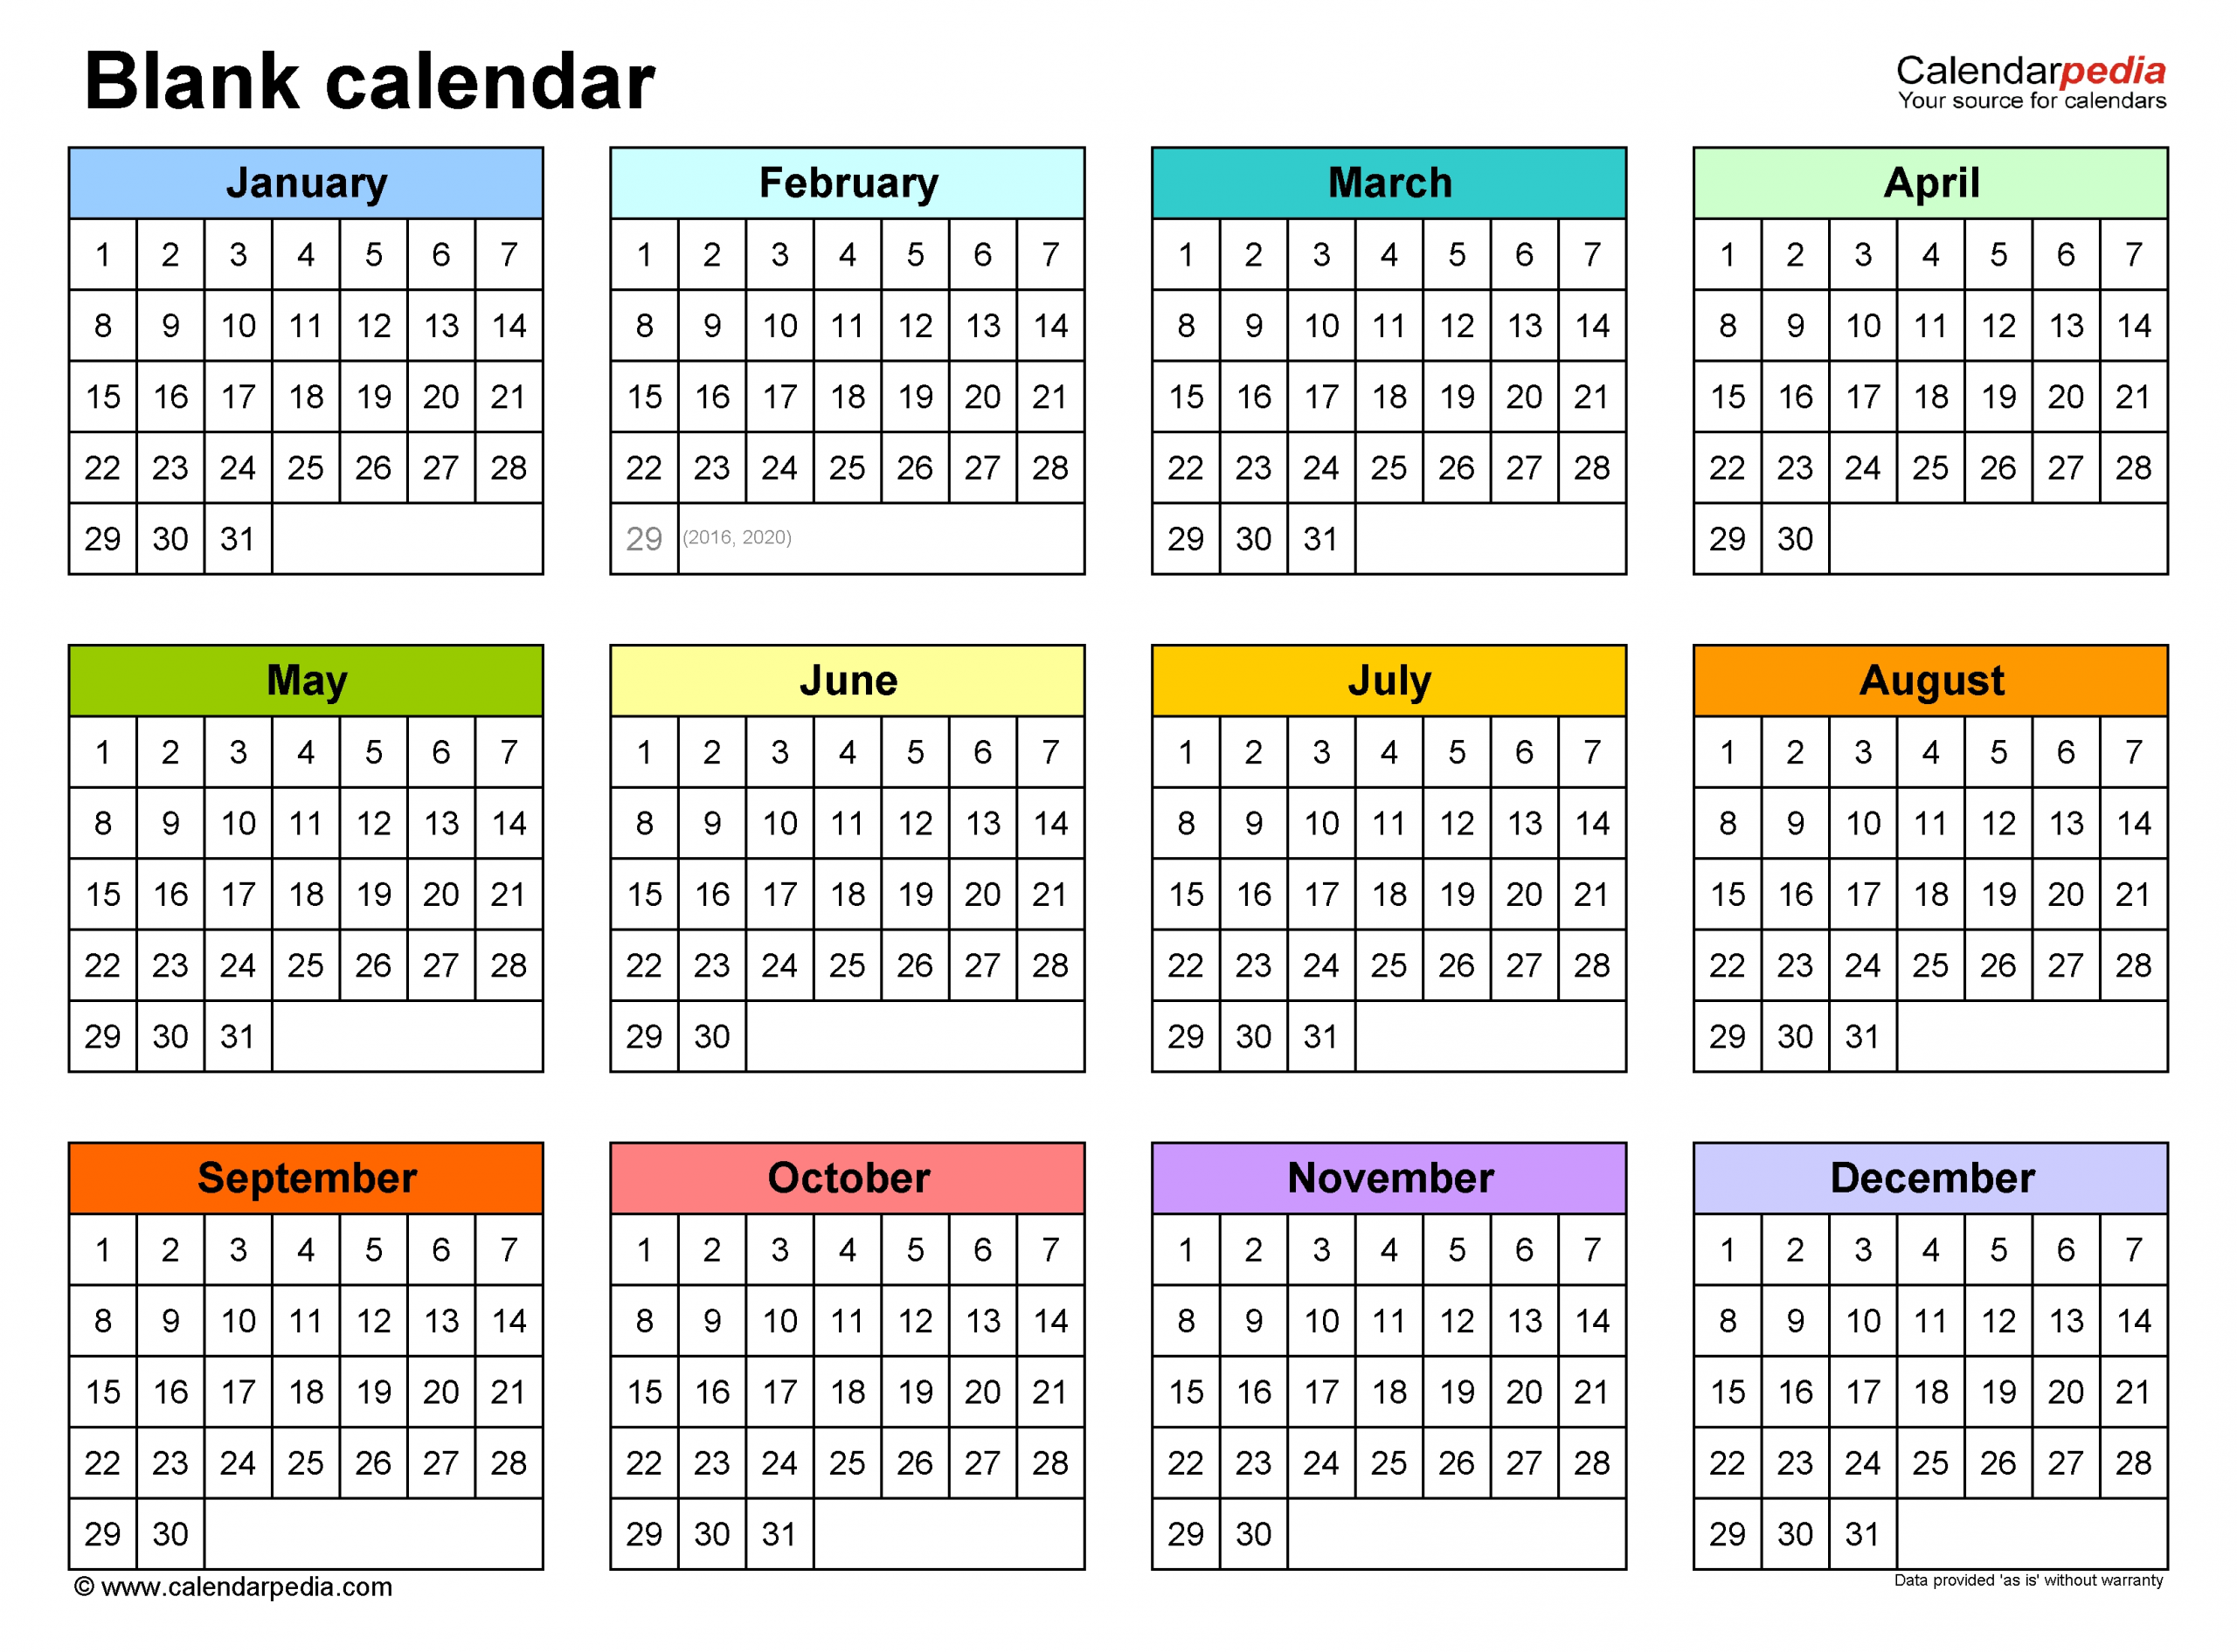 Blank Calendars - Free Printable Microsoft Word Templates Year Calendar One Page Template